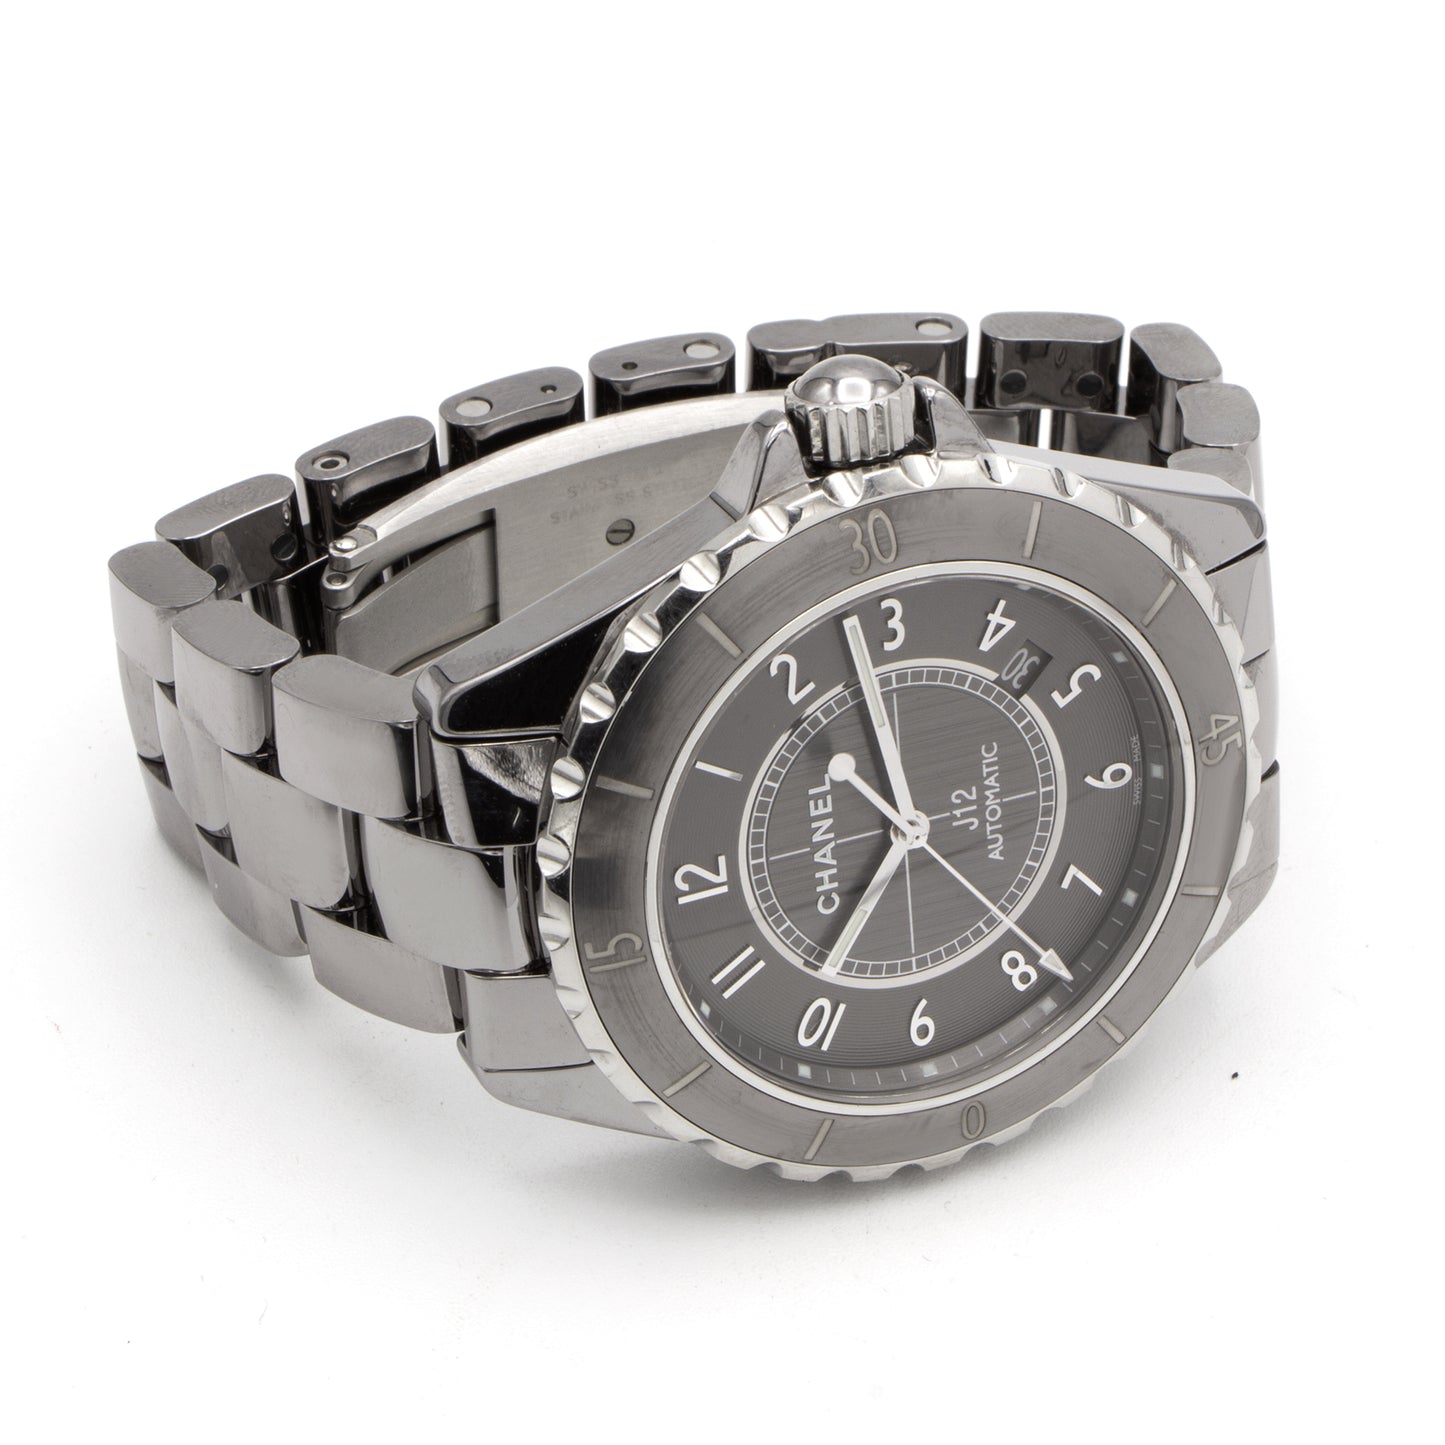 Chanel J12 automatic titanium watch